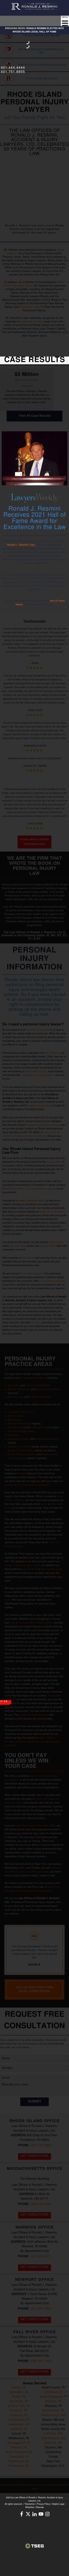 Ronald J. Resmini Law Offices, Ltd. - Providence RI Lawyers